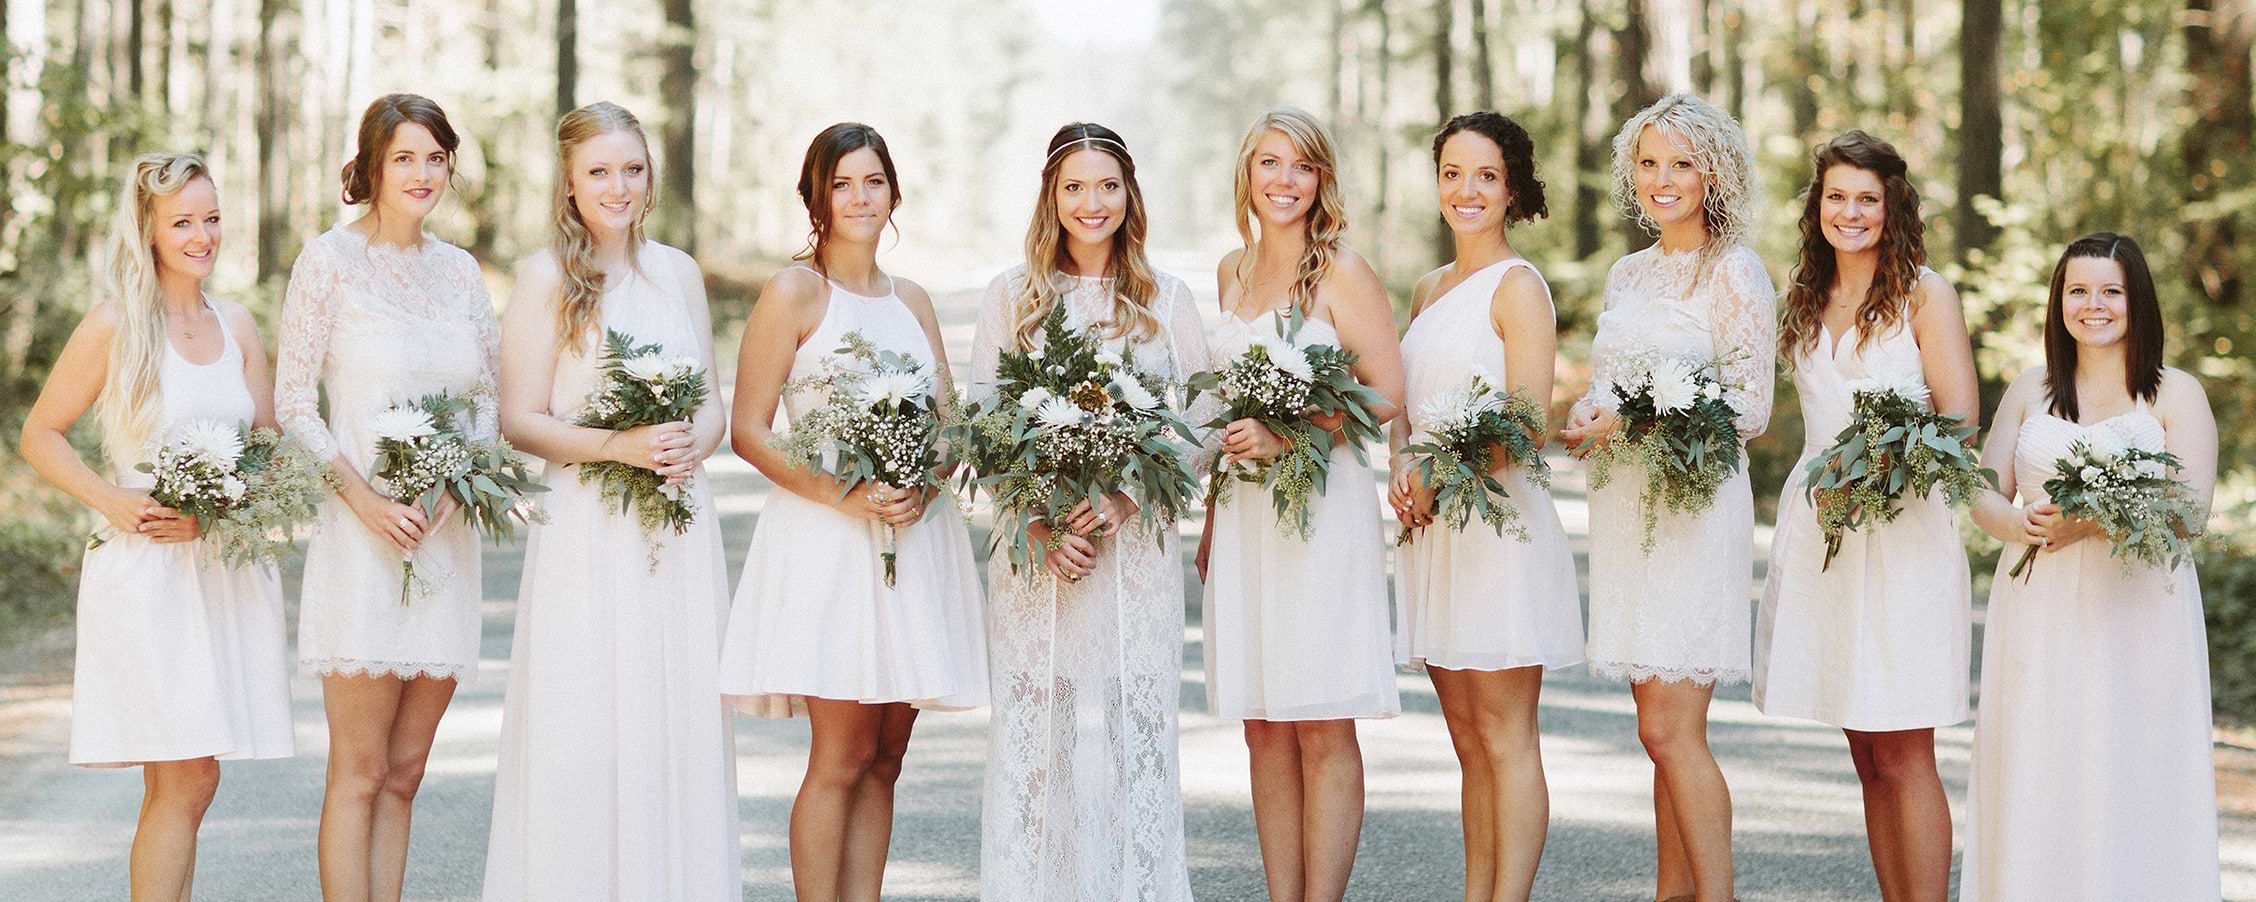 Wedgewood Weddings Bridesmaids Dresses and Attire - Weddington Way